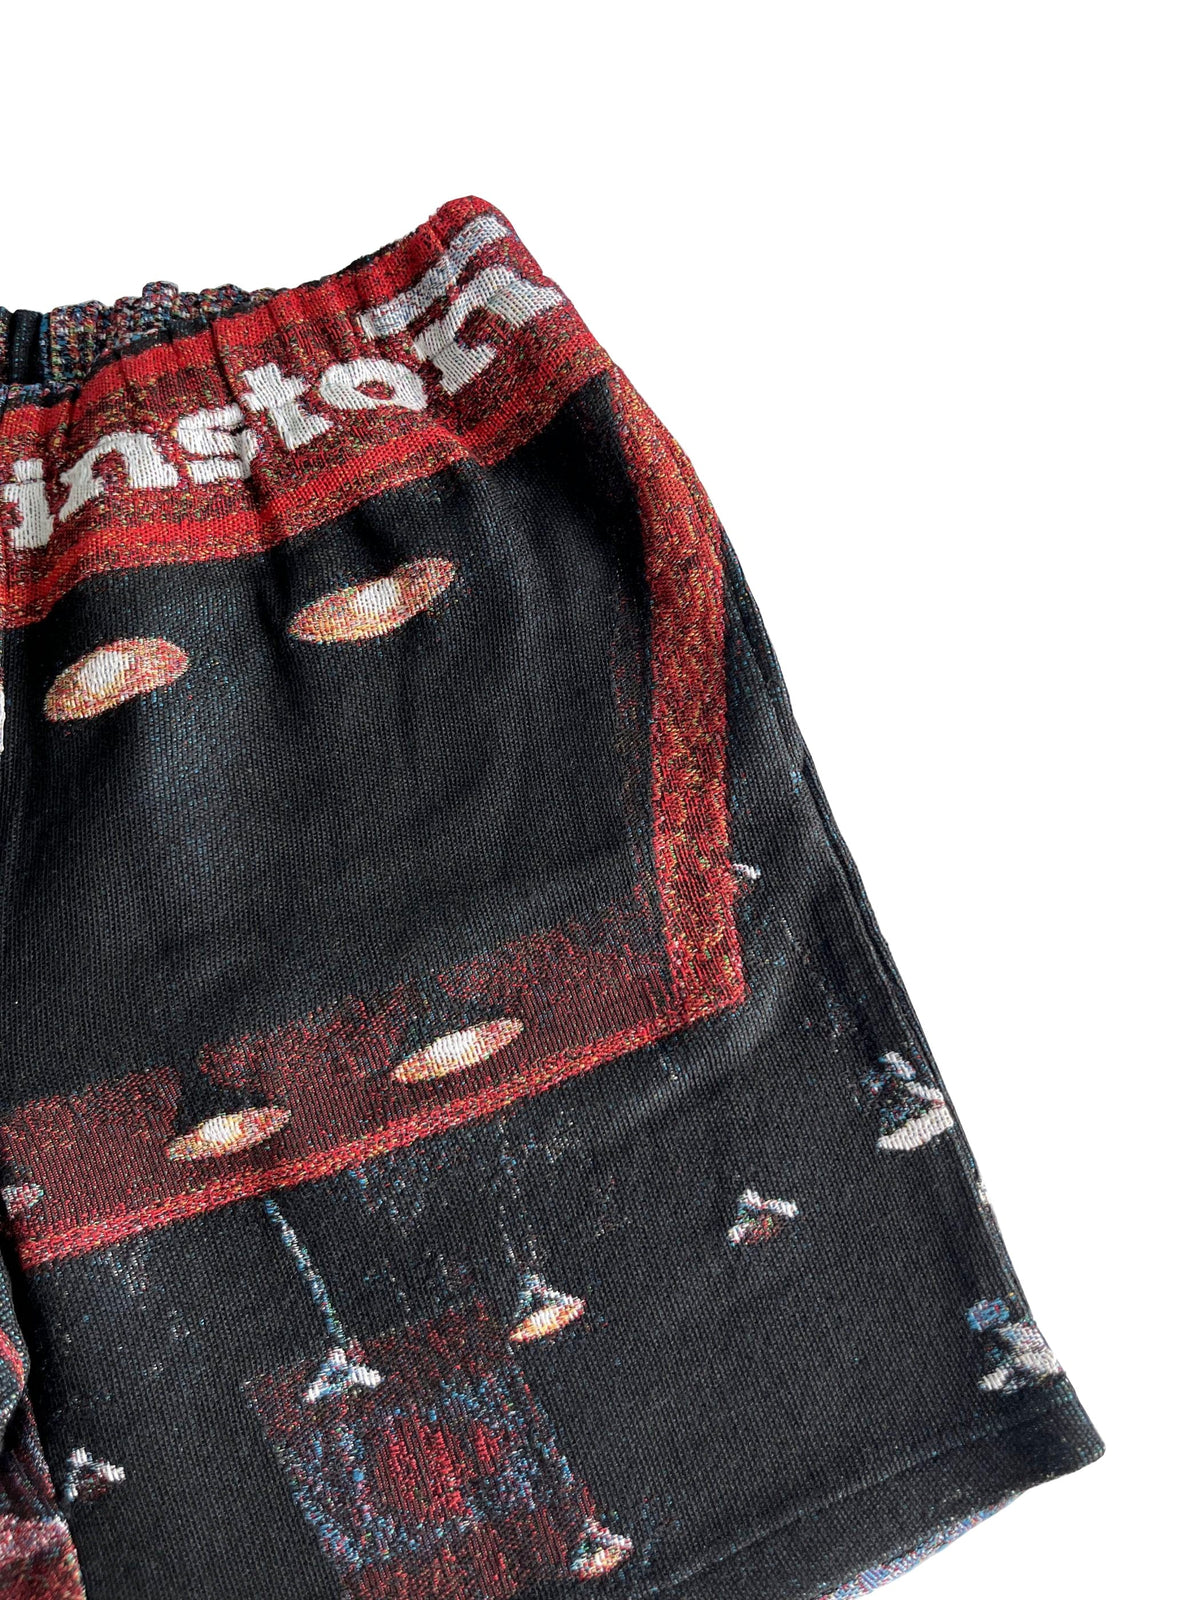 RDMCLOTHINGART tapestry hoodie RED MJ DUNK SHORTS